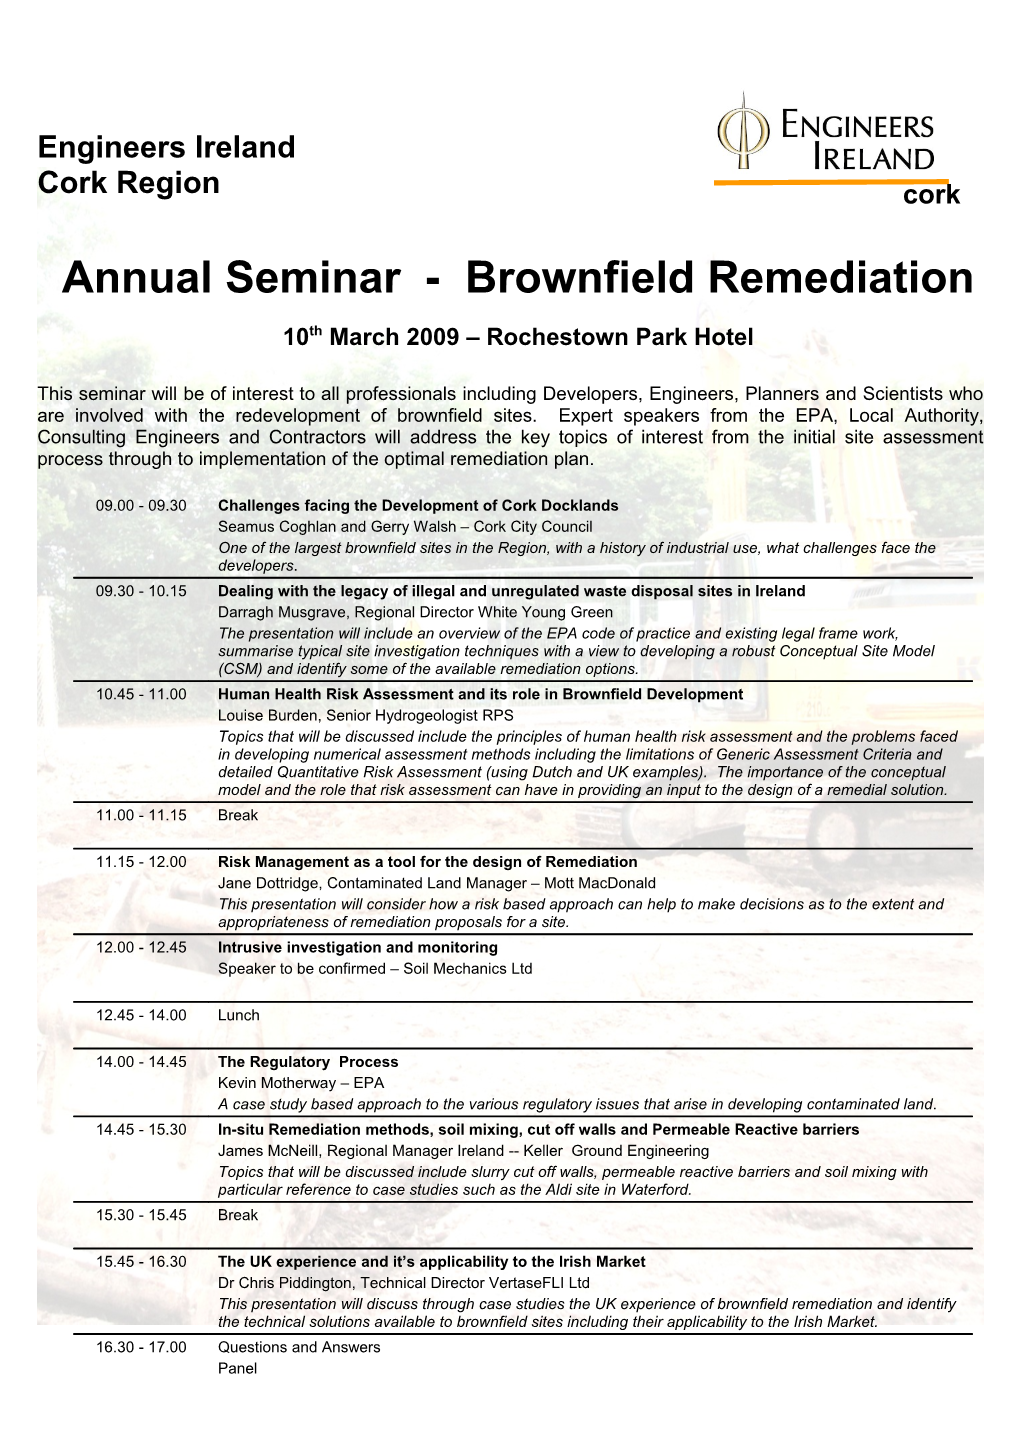 Brownfield Remediation